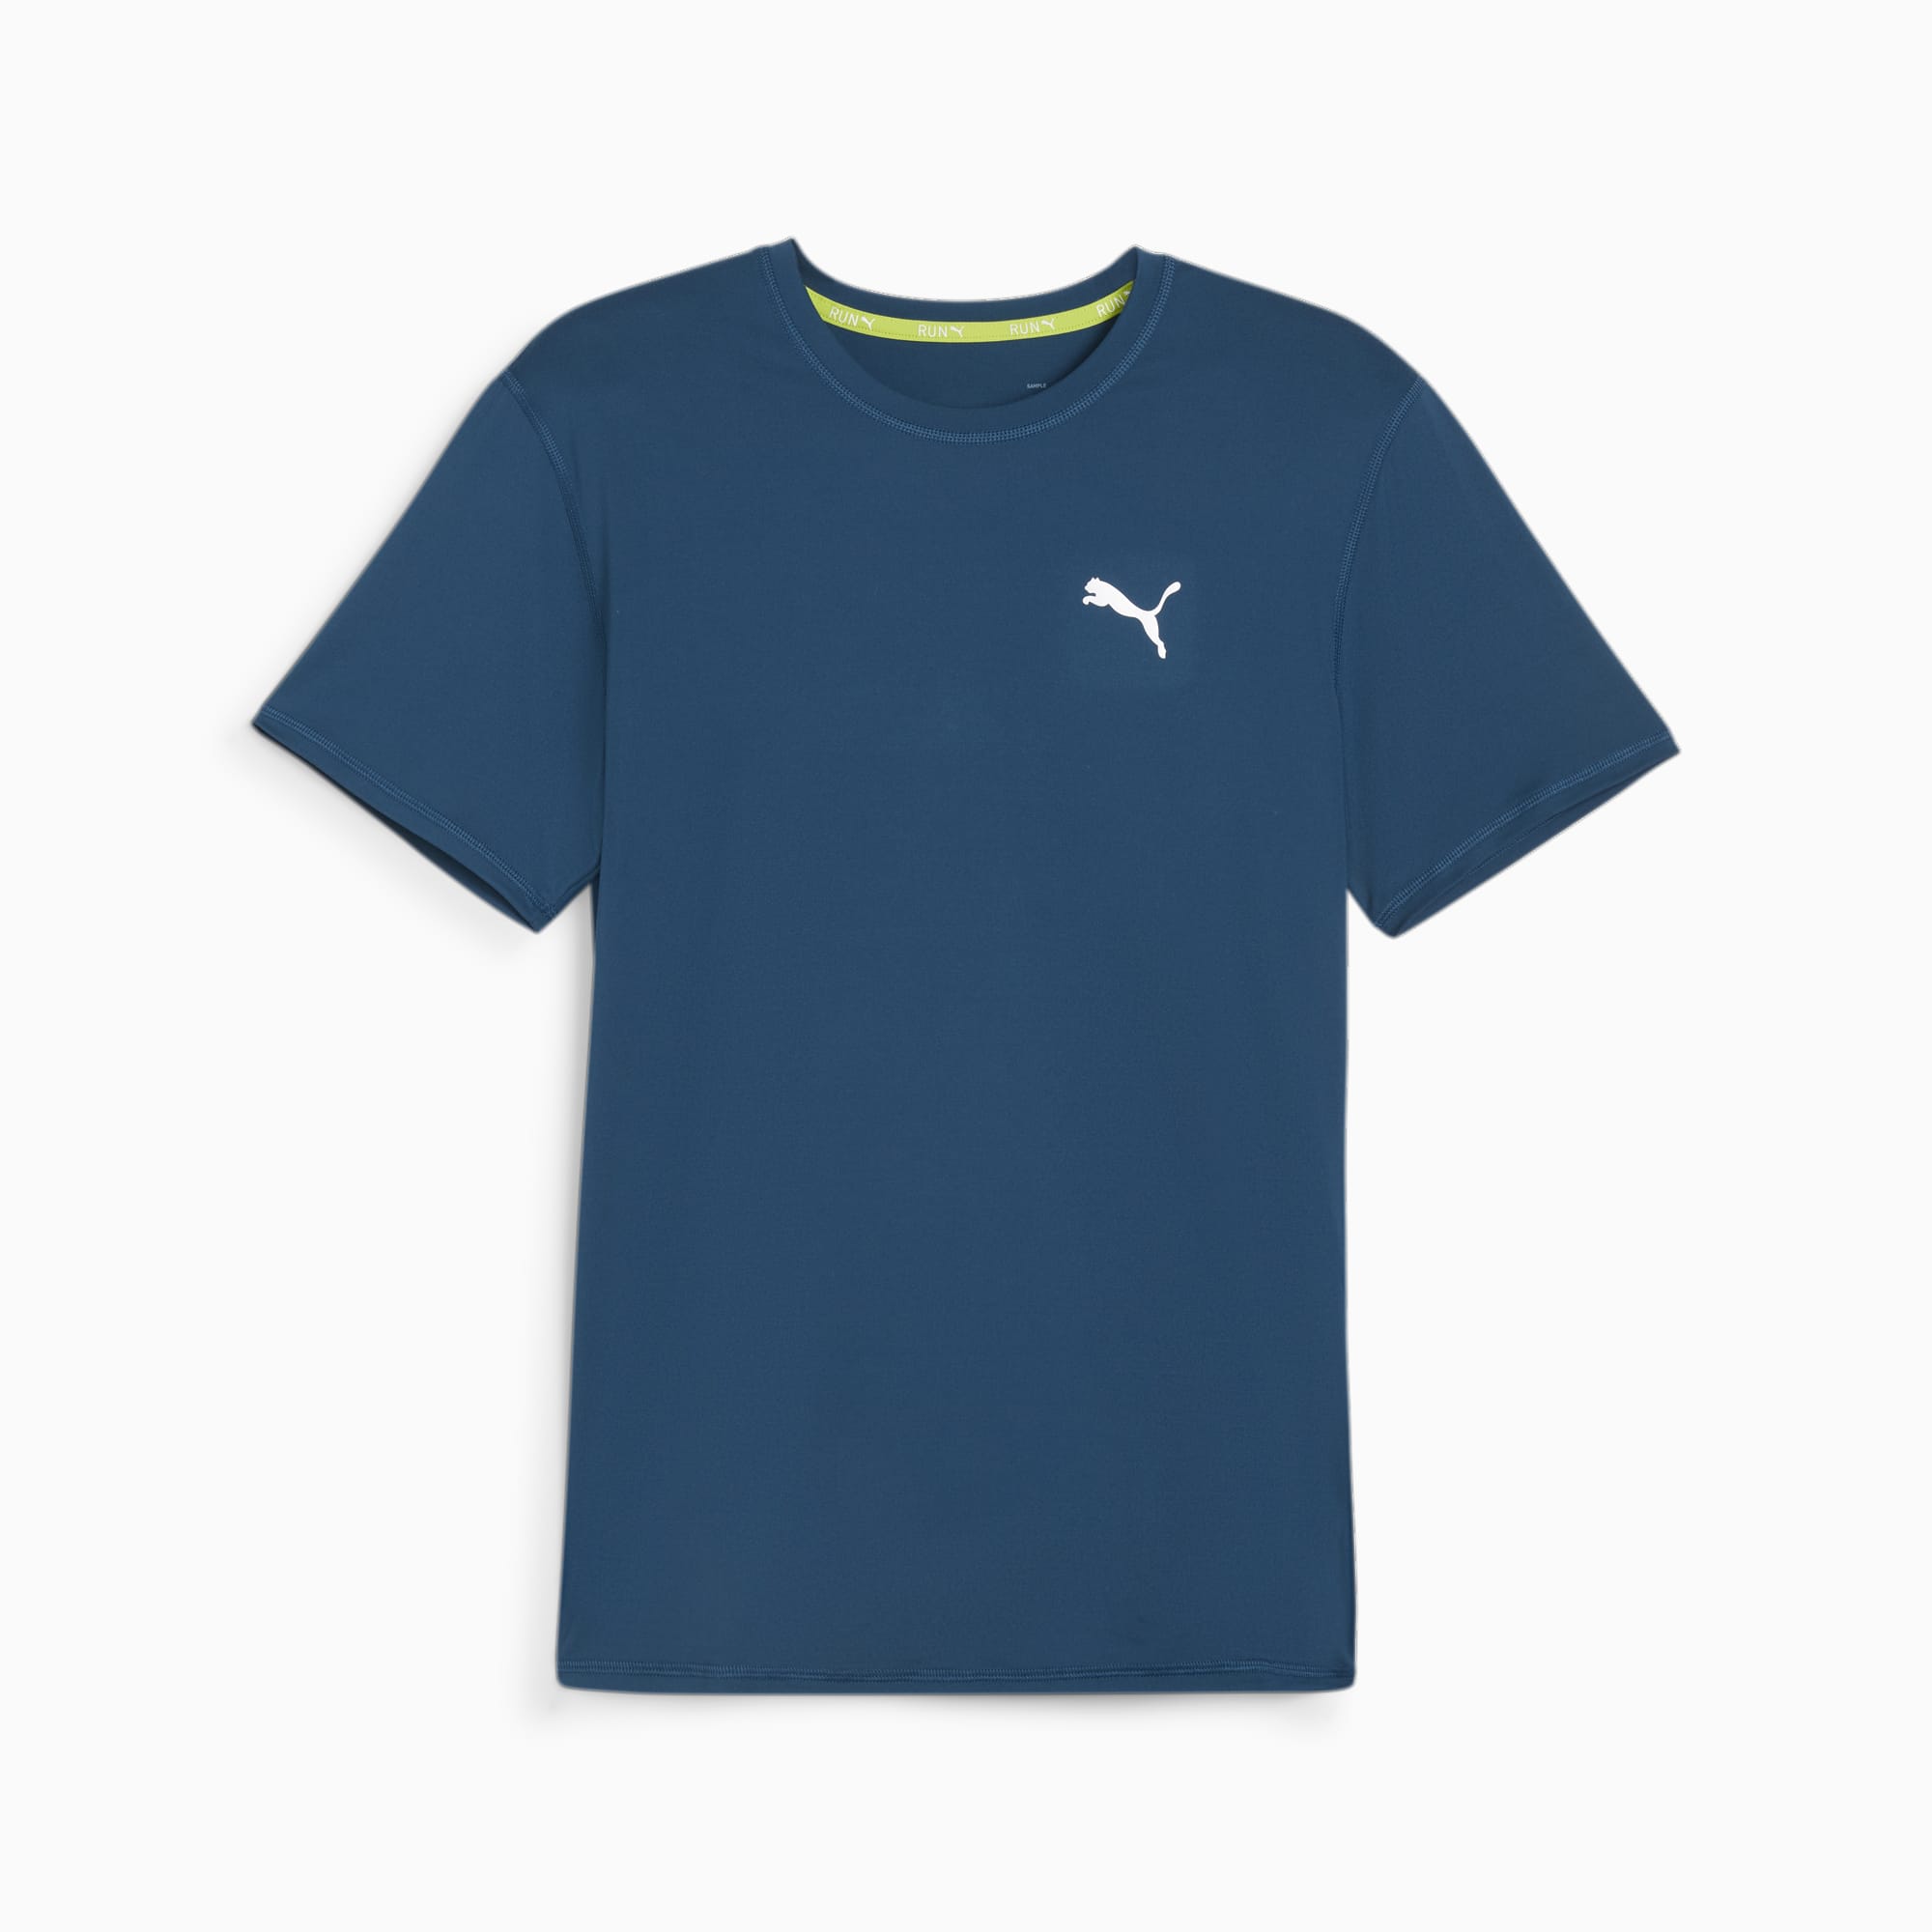 PUMA Run Cloudspun Short Sleeve Men's Running Tee Shirt, Ocean Tropic, Size XS